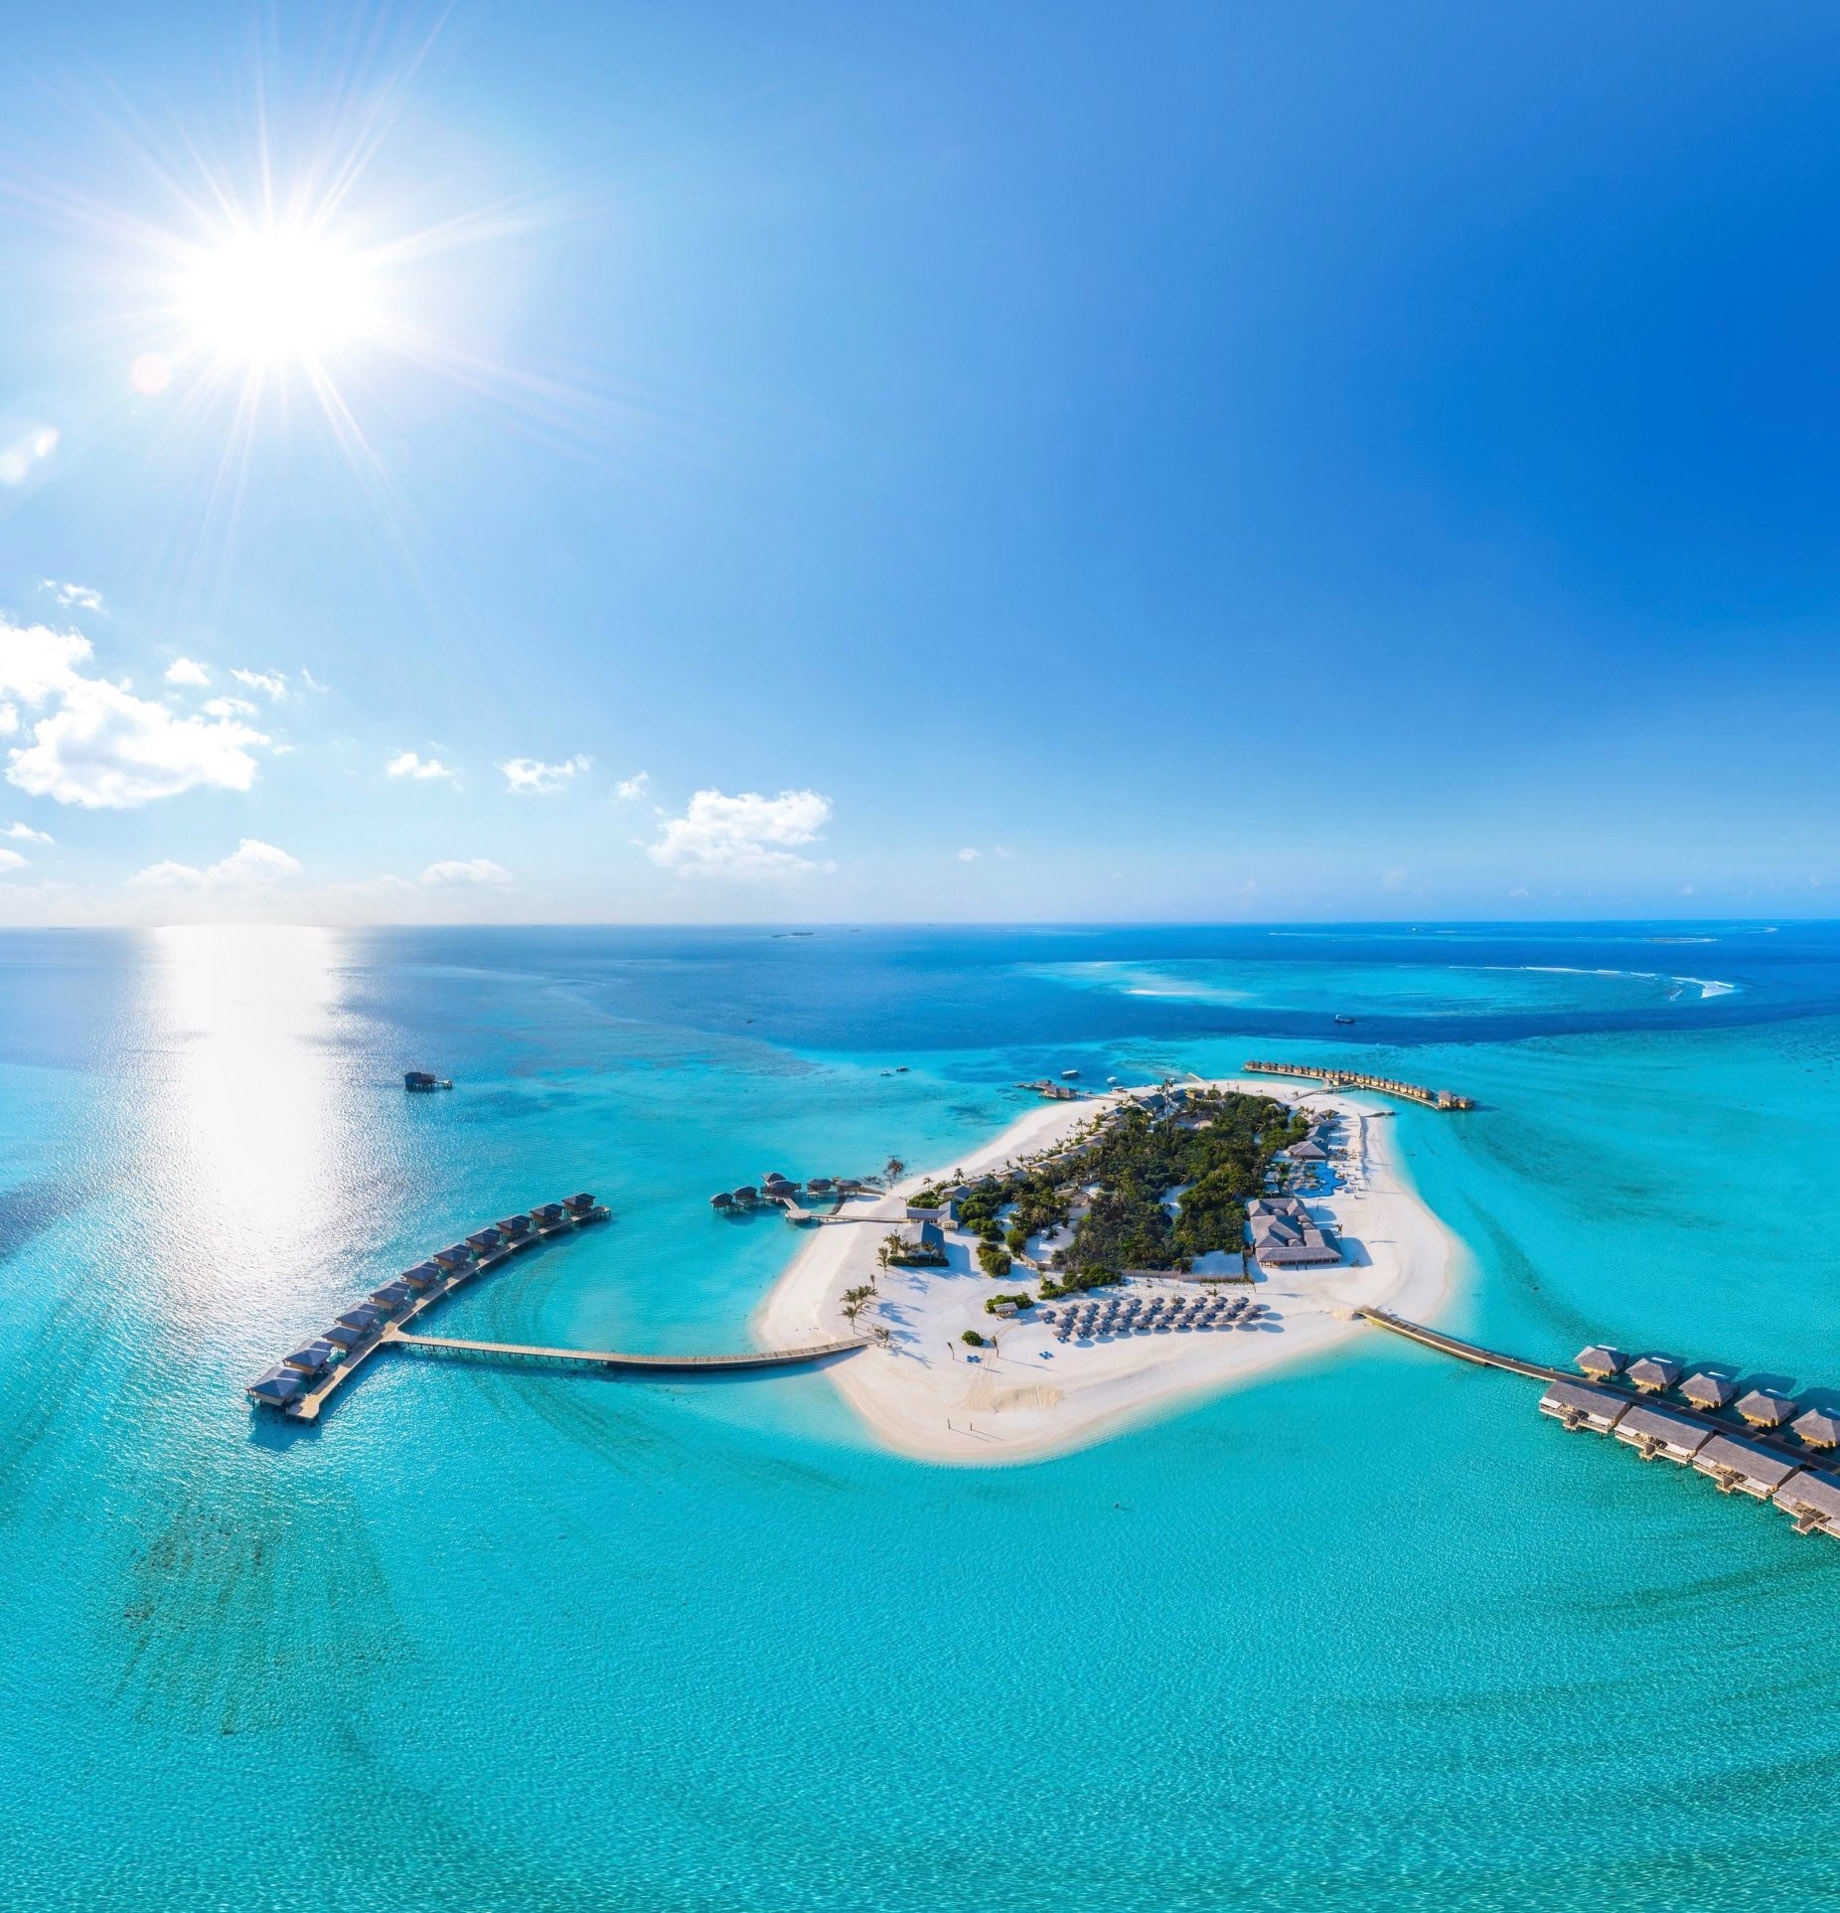 You & Me Maldives Resort – Uthurumaafaru, Raa Atoll, Maldives – Resort Aerial View